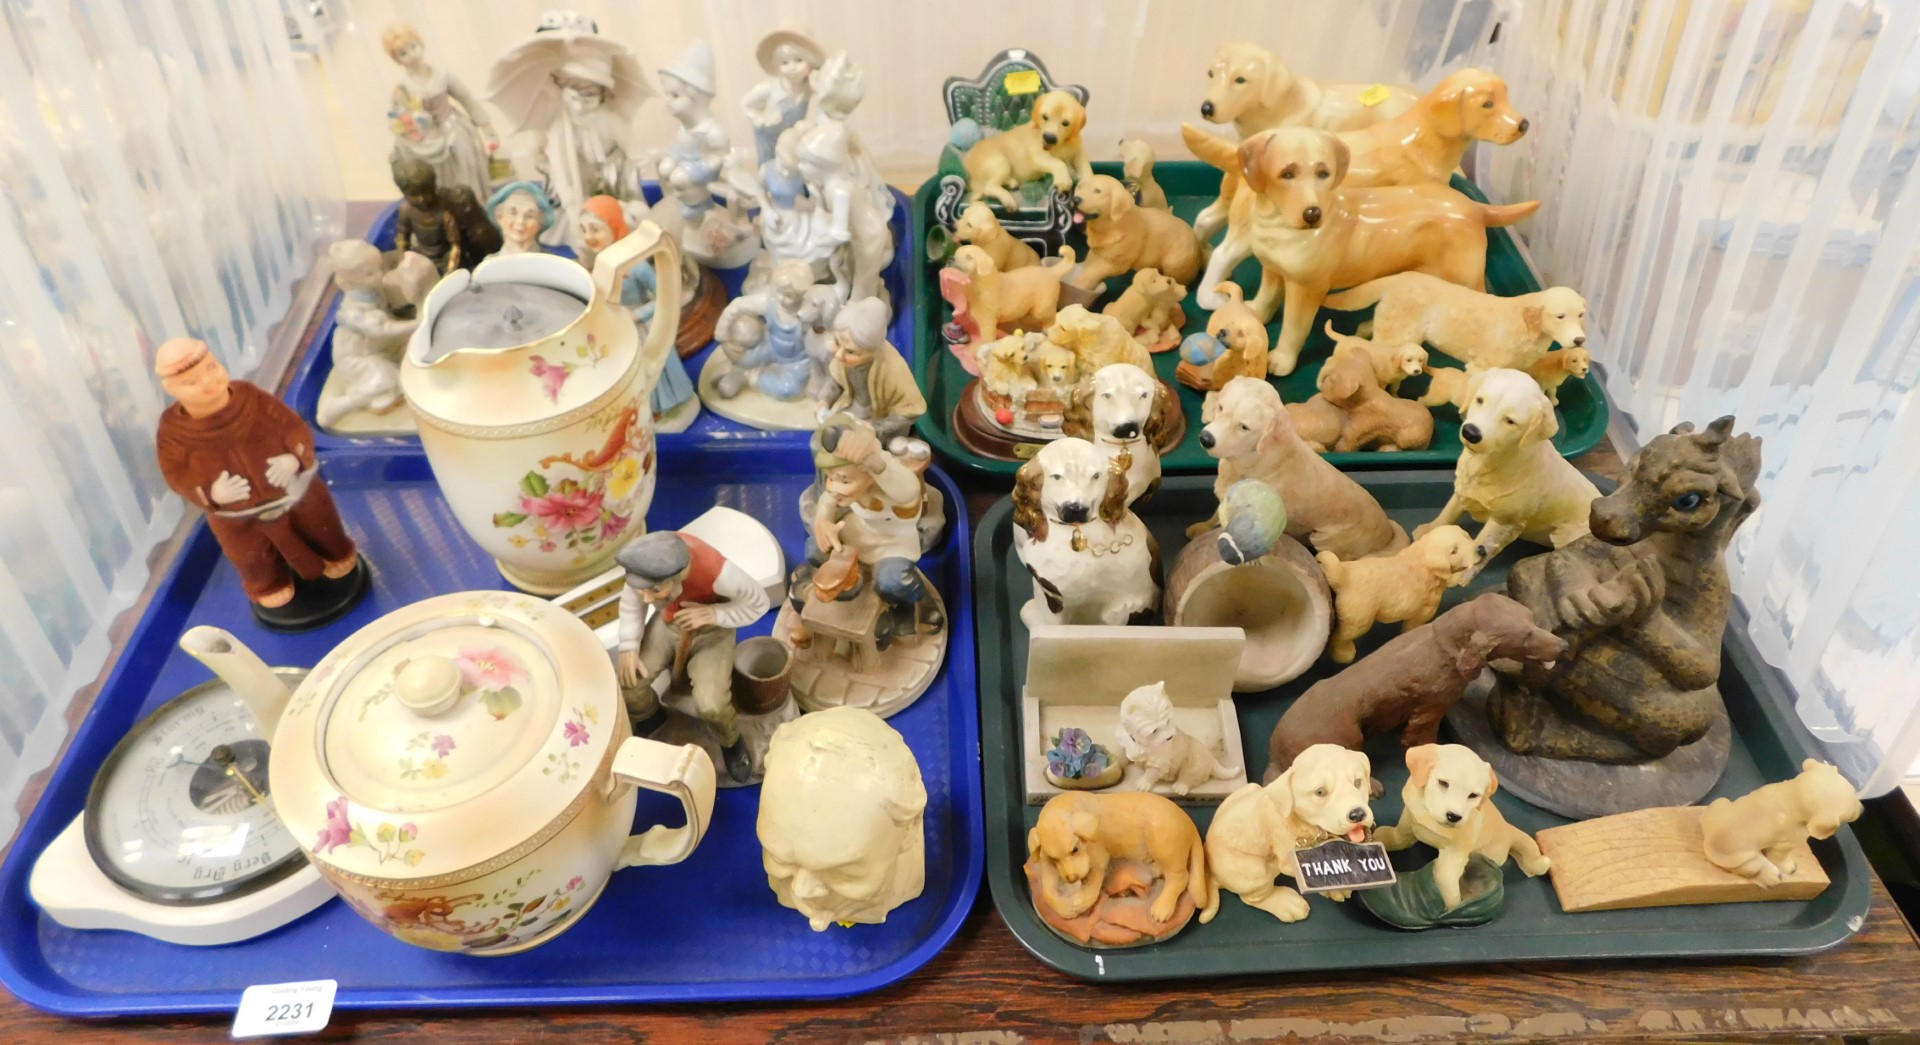 Ceramics, to include animal ornaments, figural ornaments, dogs, people, plastic Monk, ovenware teapo